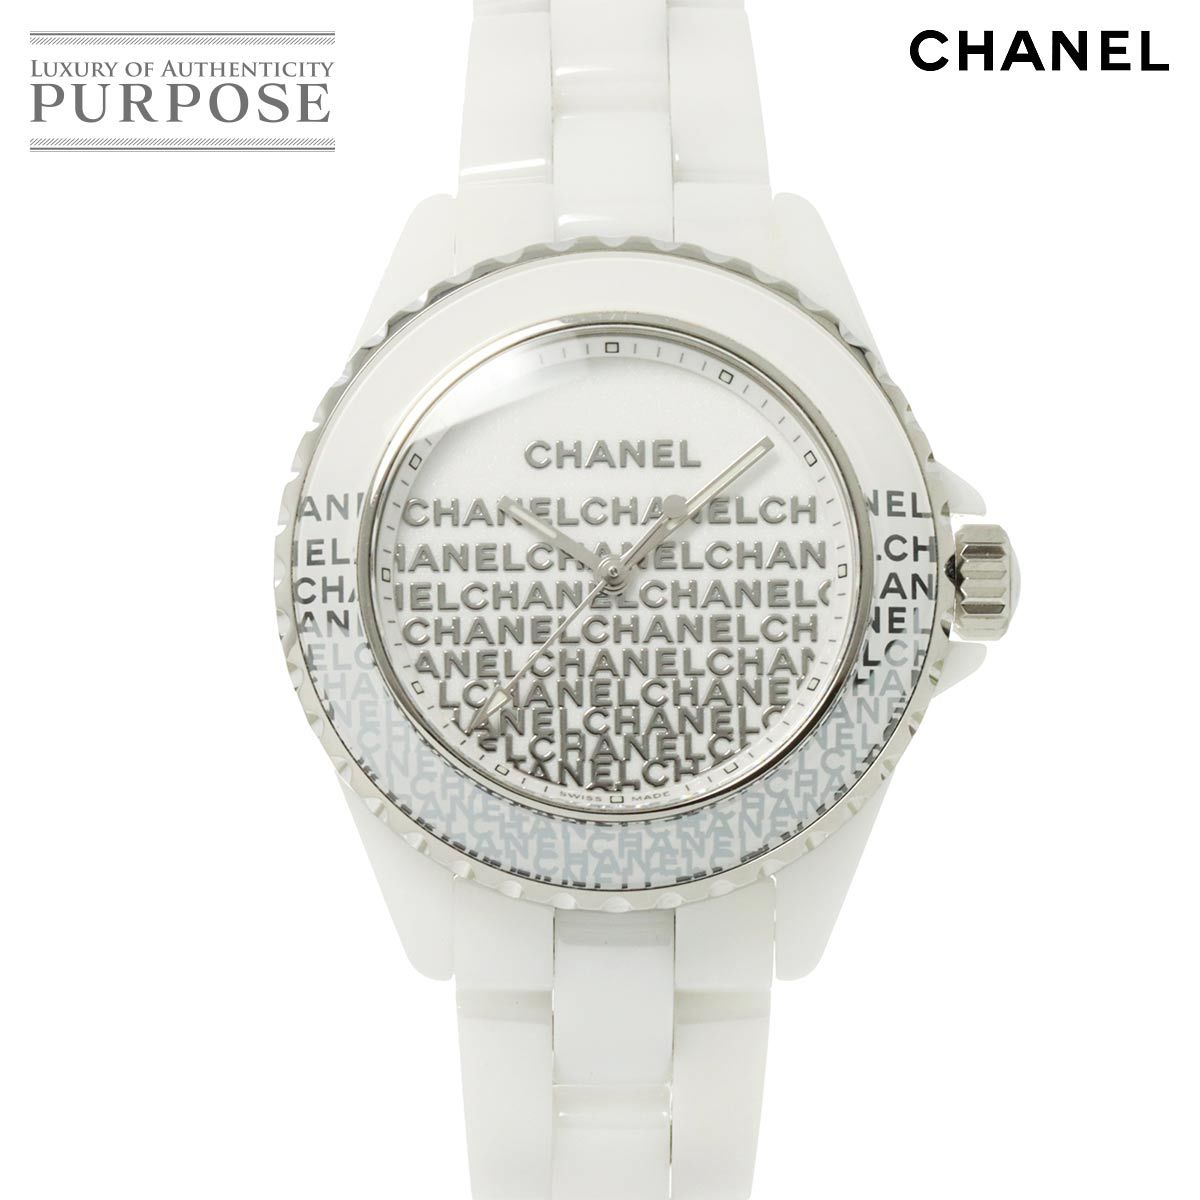  Chanel CHANEL J12 33mm H7419 lady's wristwatch white face ceramic quartz watch 90224123